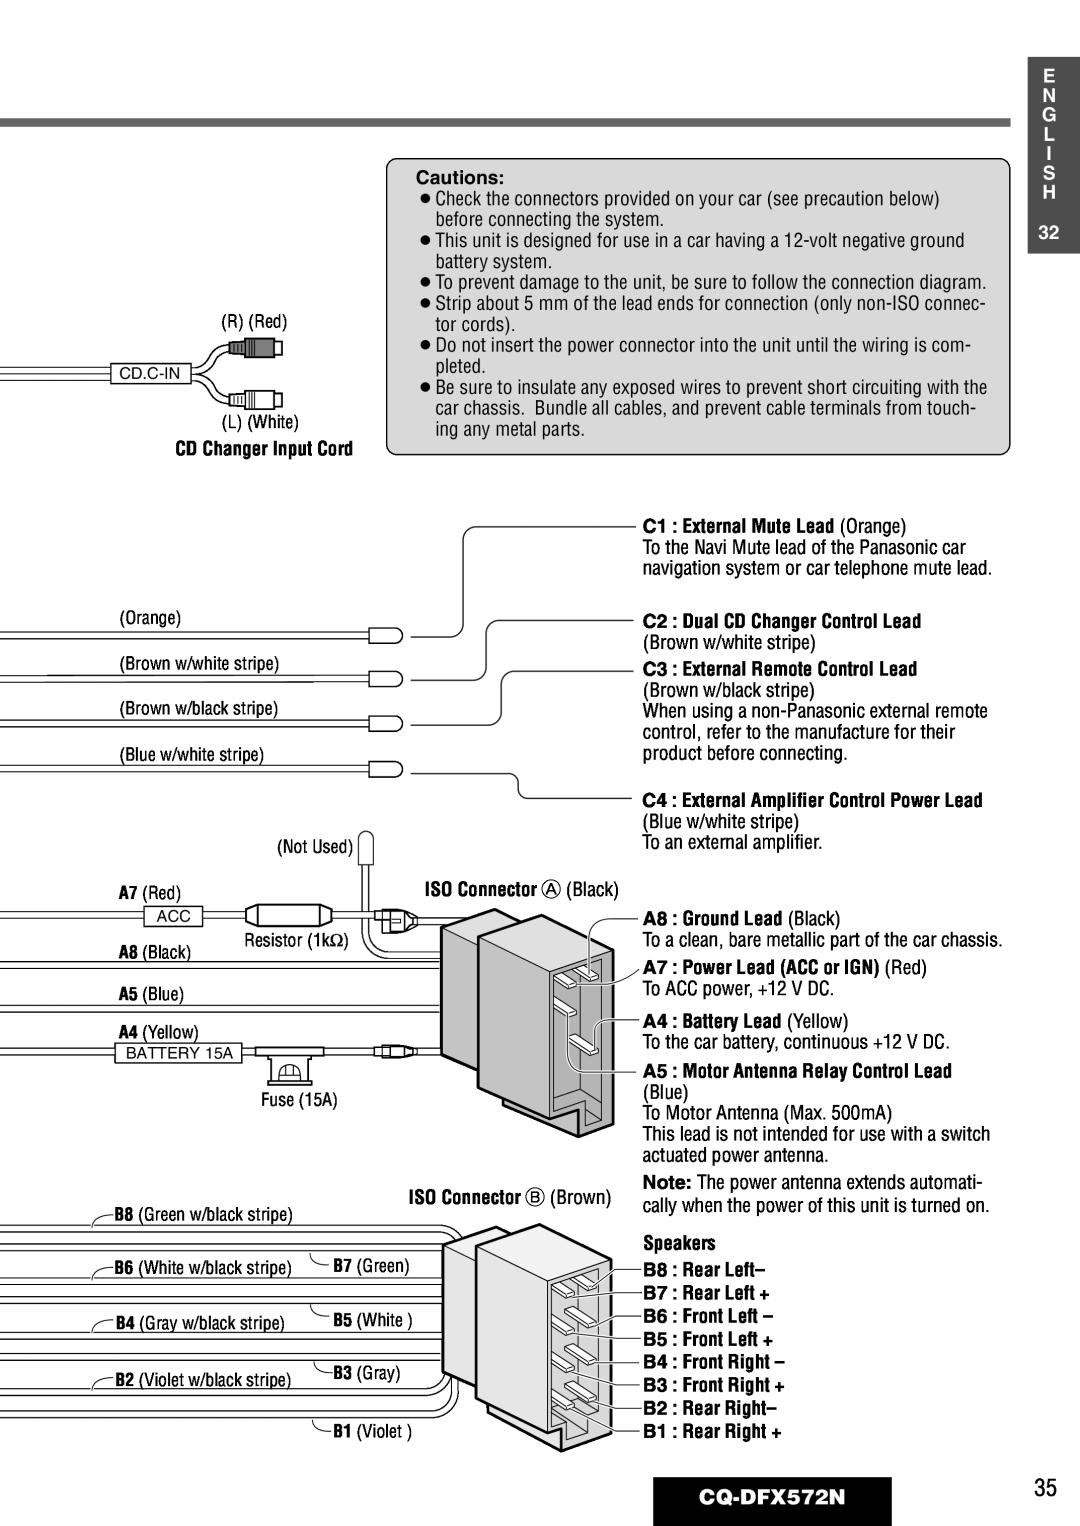 Panasonic operating instructions CQ-DFX572N35, E N G L I S H 